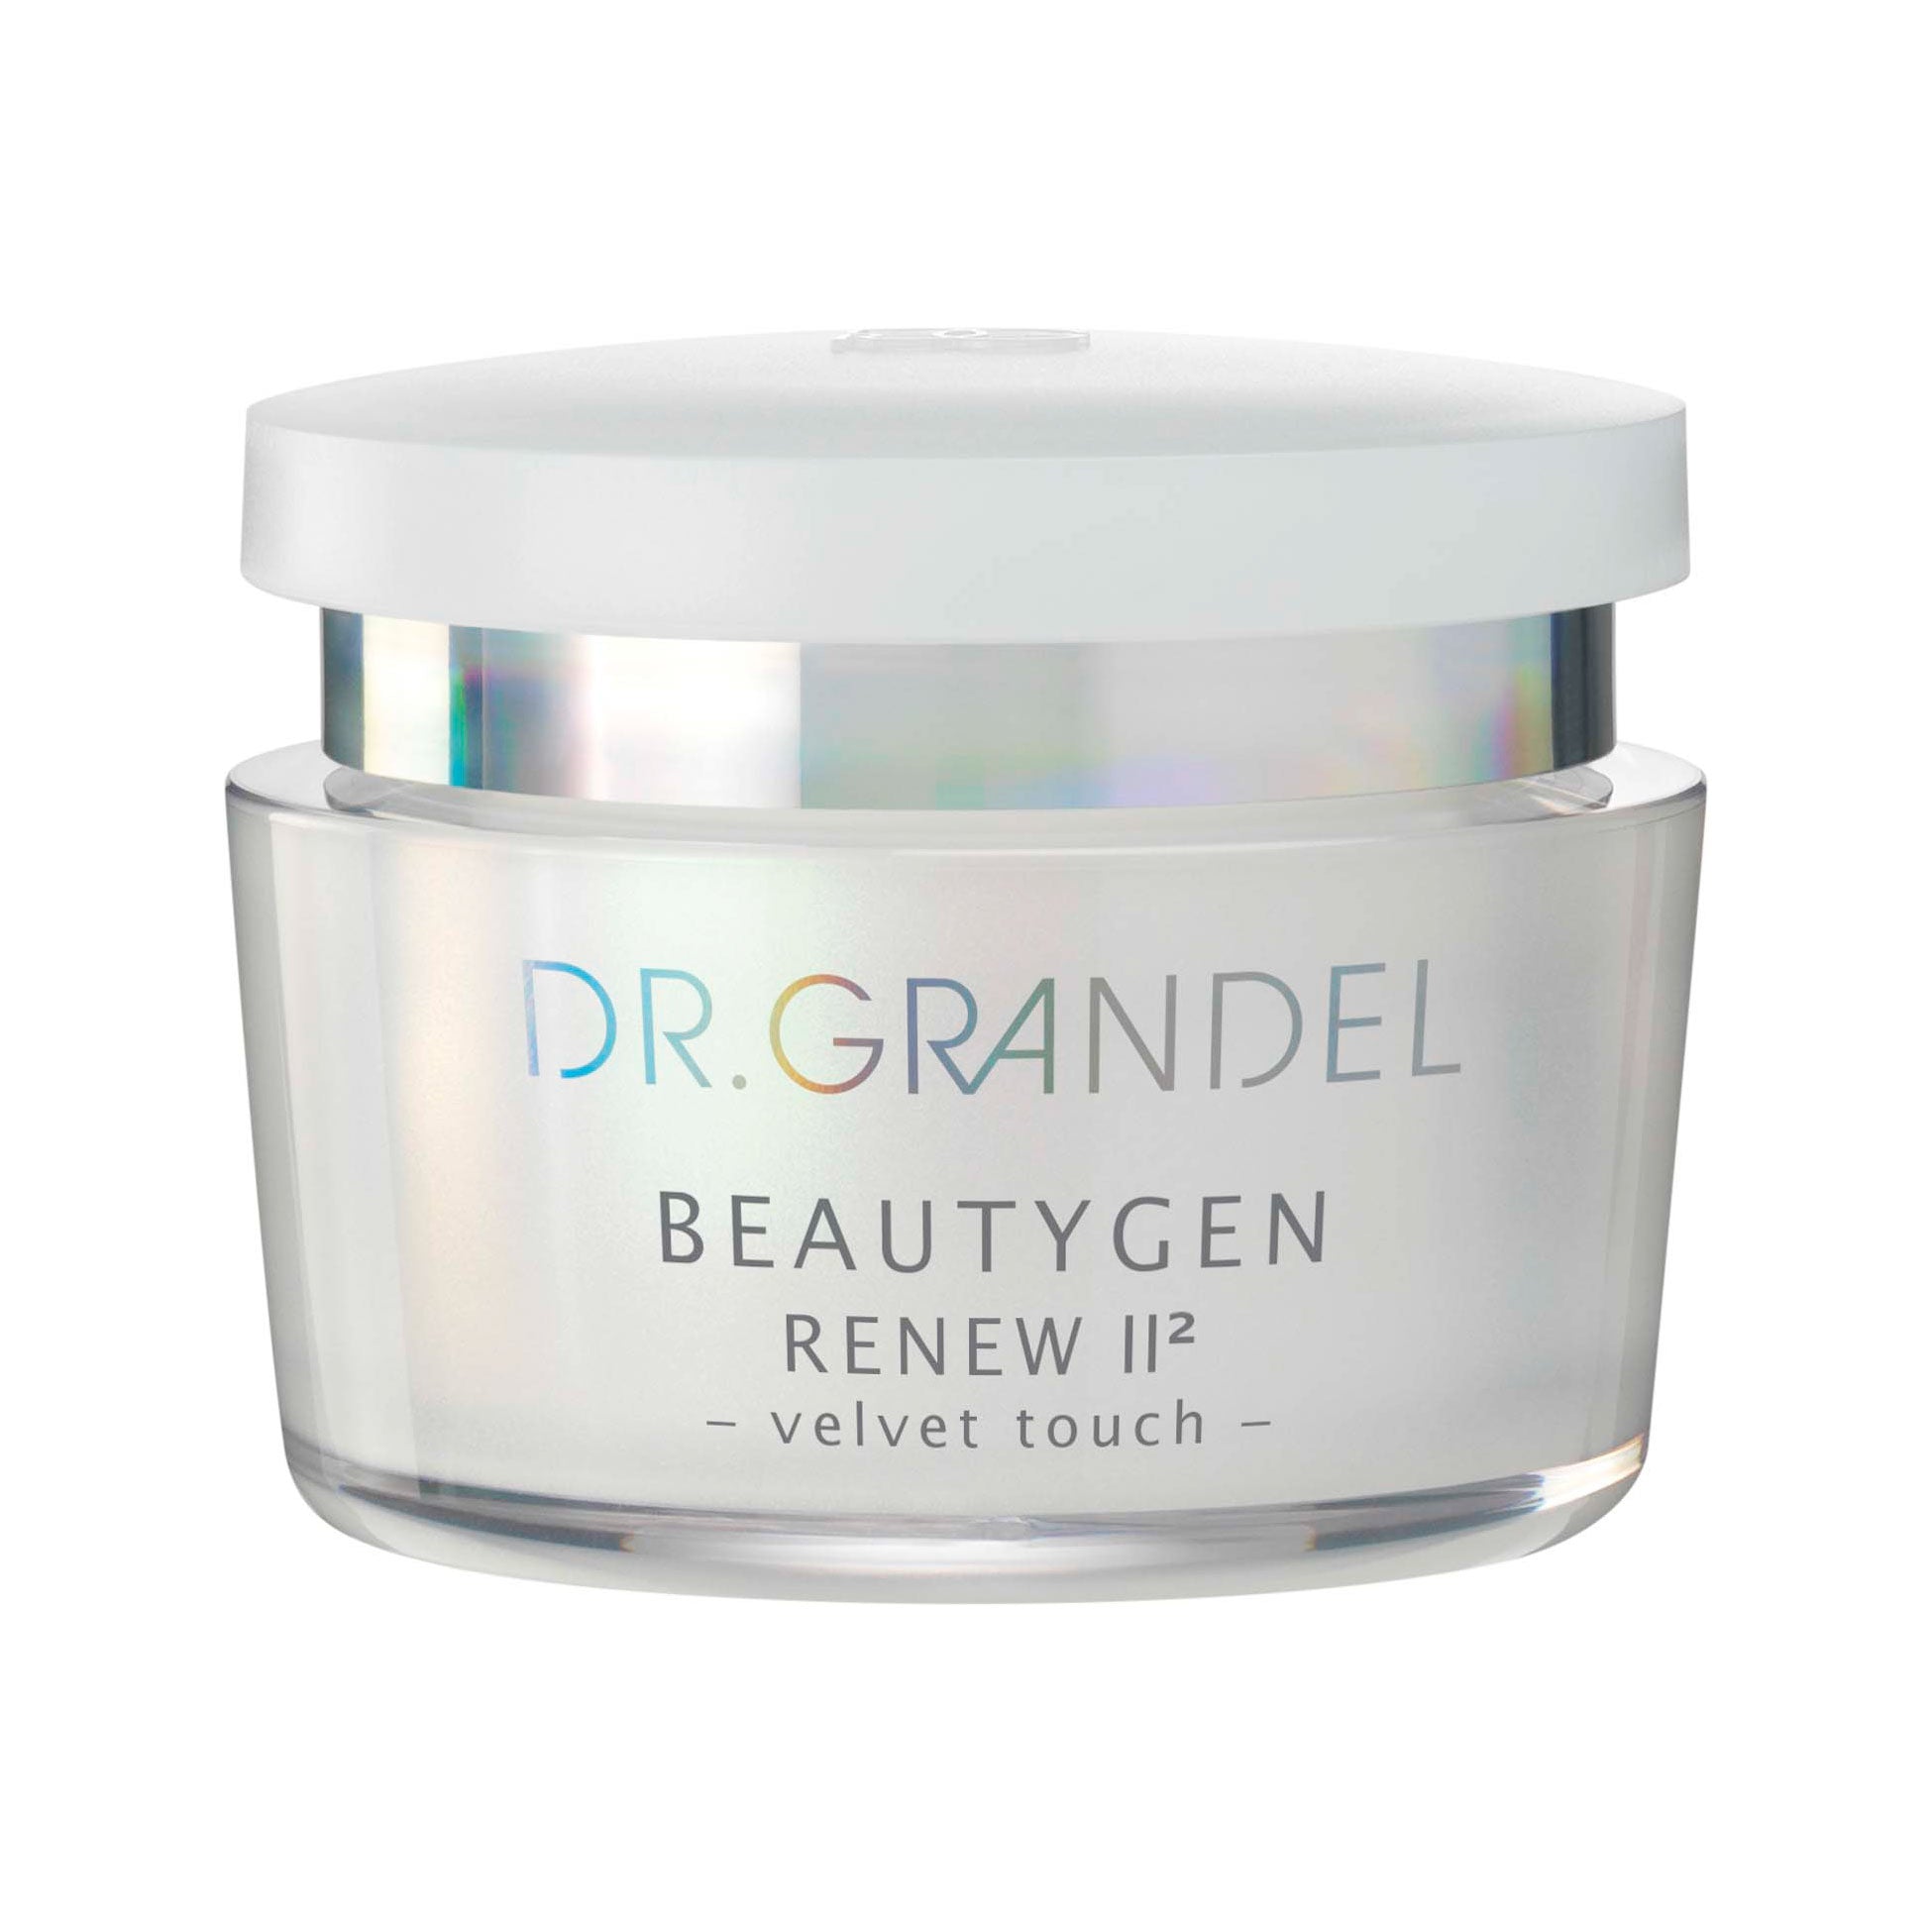 Dr. Grandel Beautygen Renew II Velvet Touch